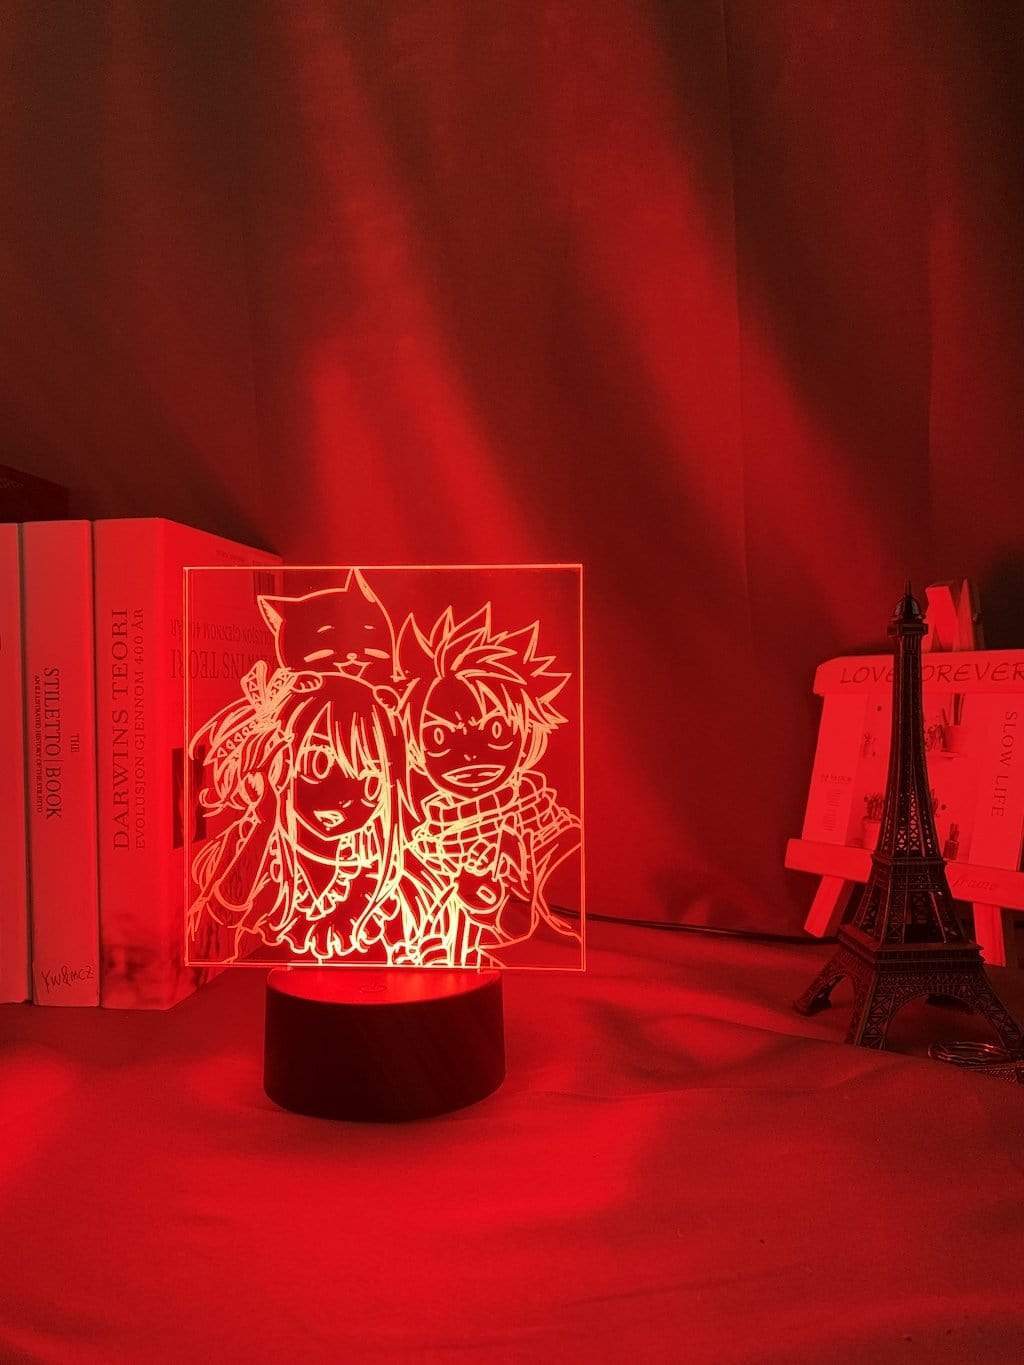 Lampe Fairy Tail Natsu Dragneel et Erza Scarlet Hugdécor veilleuse Lampe led 3D Fairy Tail